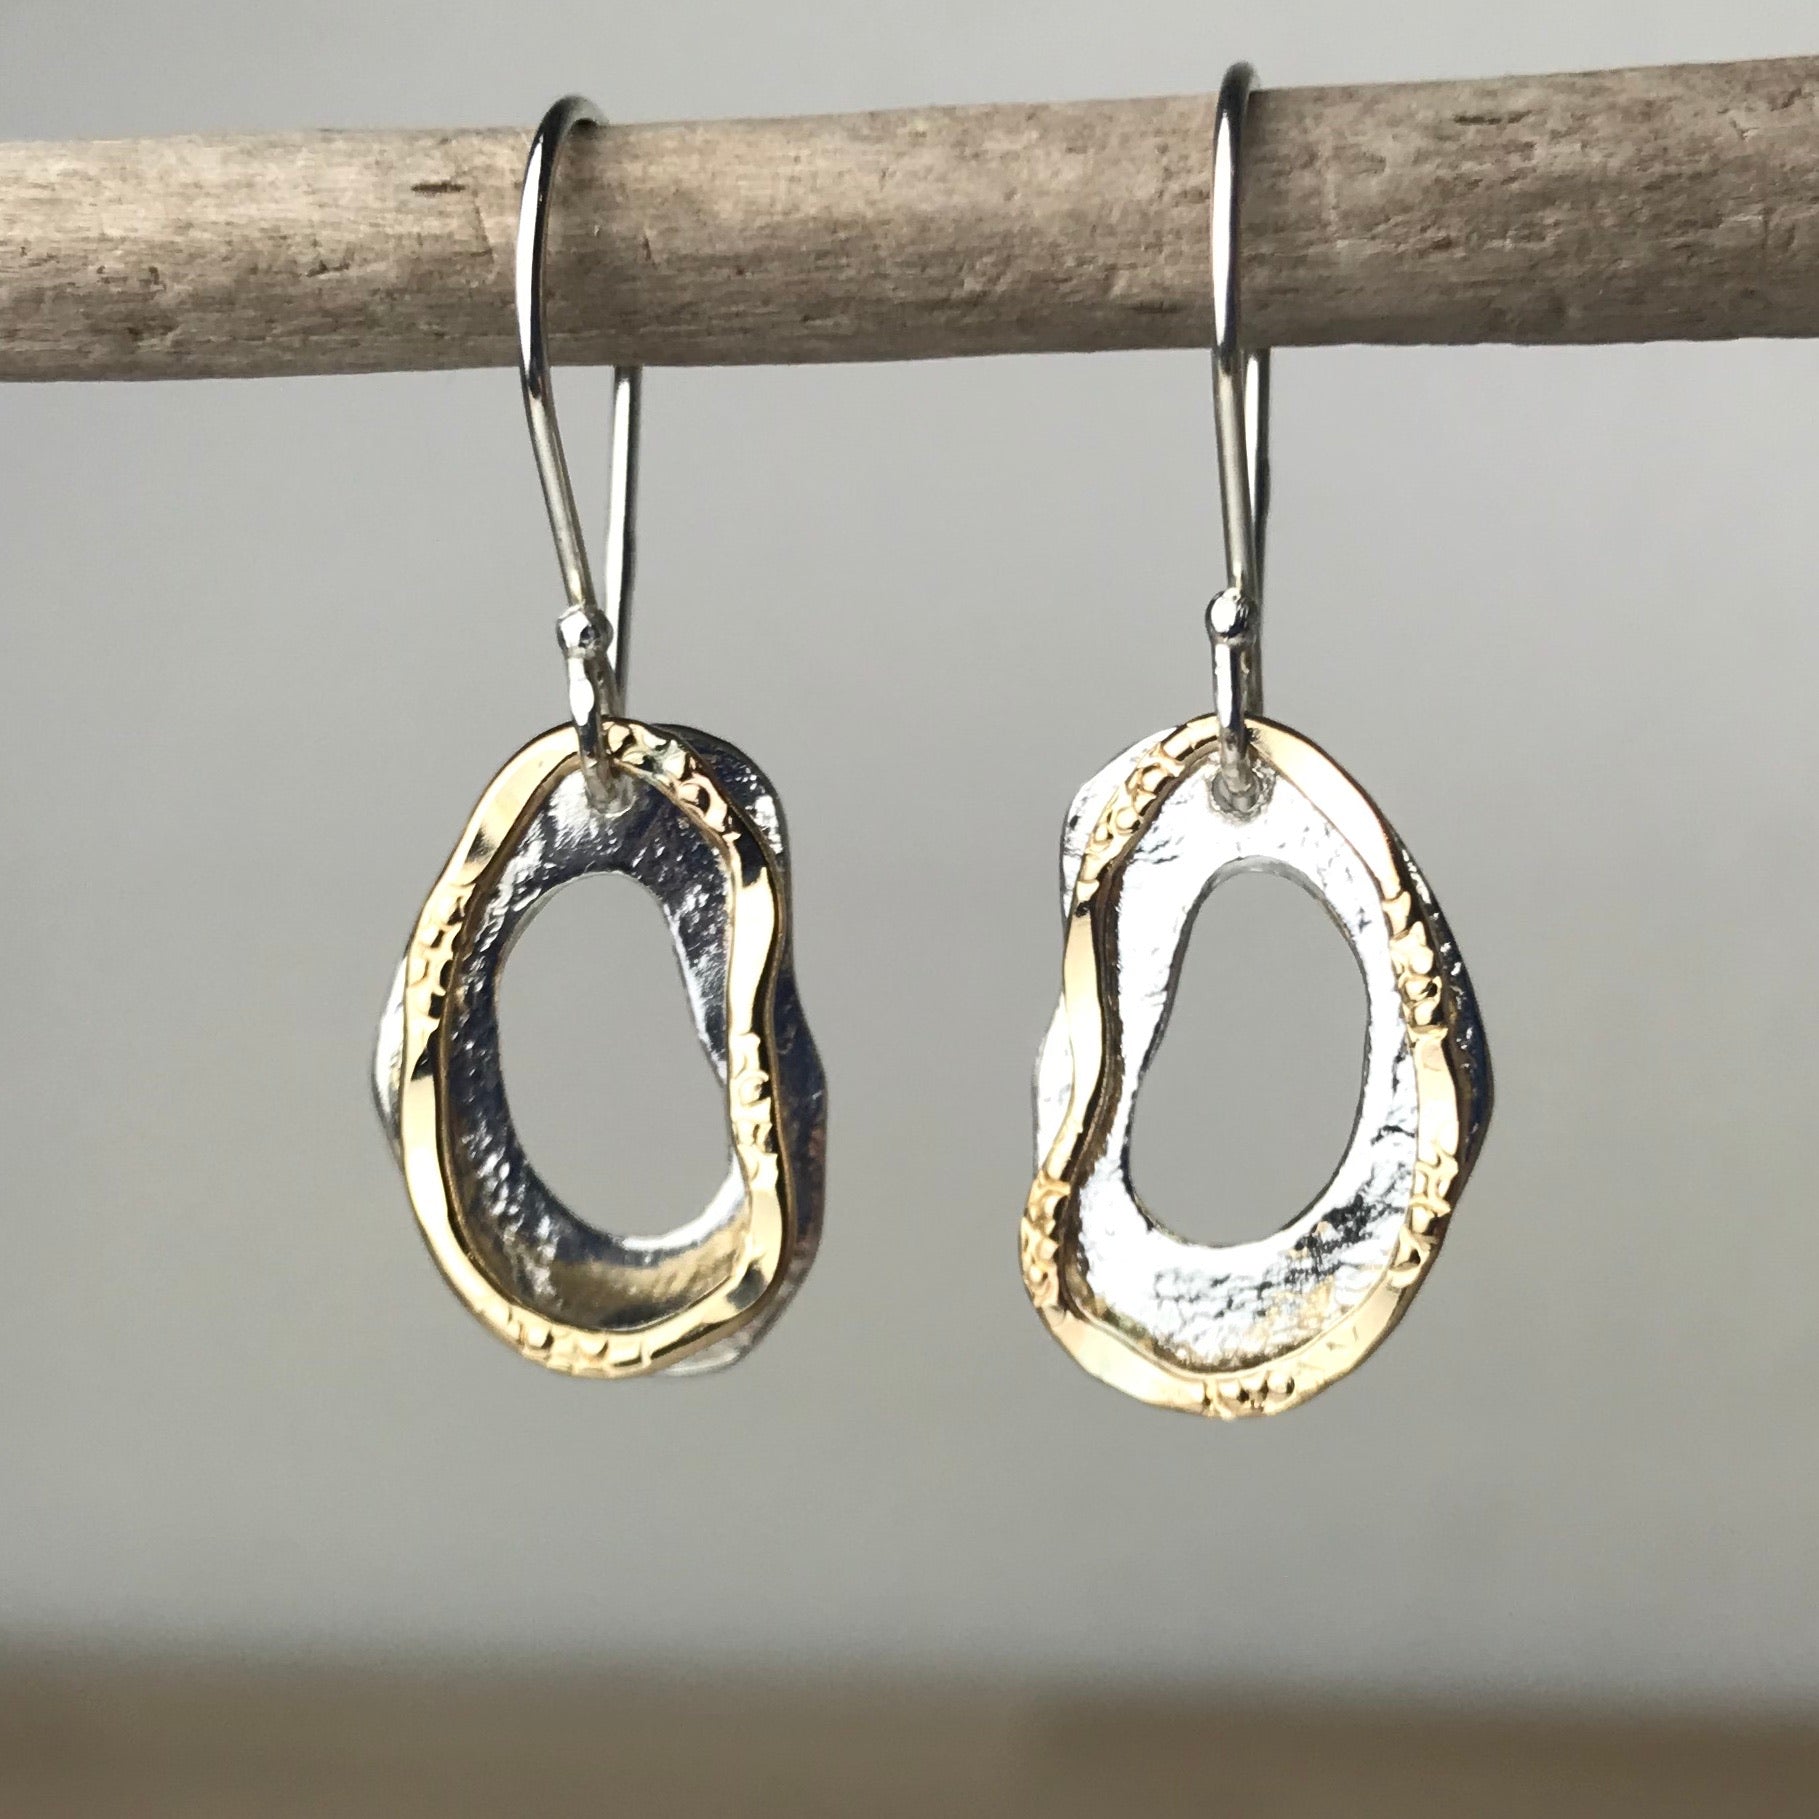 Organic Ovals Earrings - The Nancy Smillie Shop - Art, Jewellery & Designer Gifts Glasgow